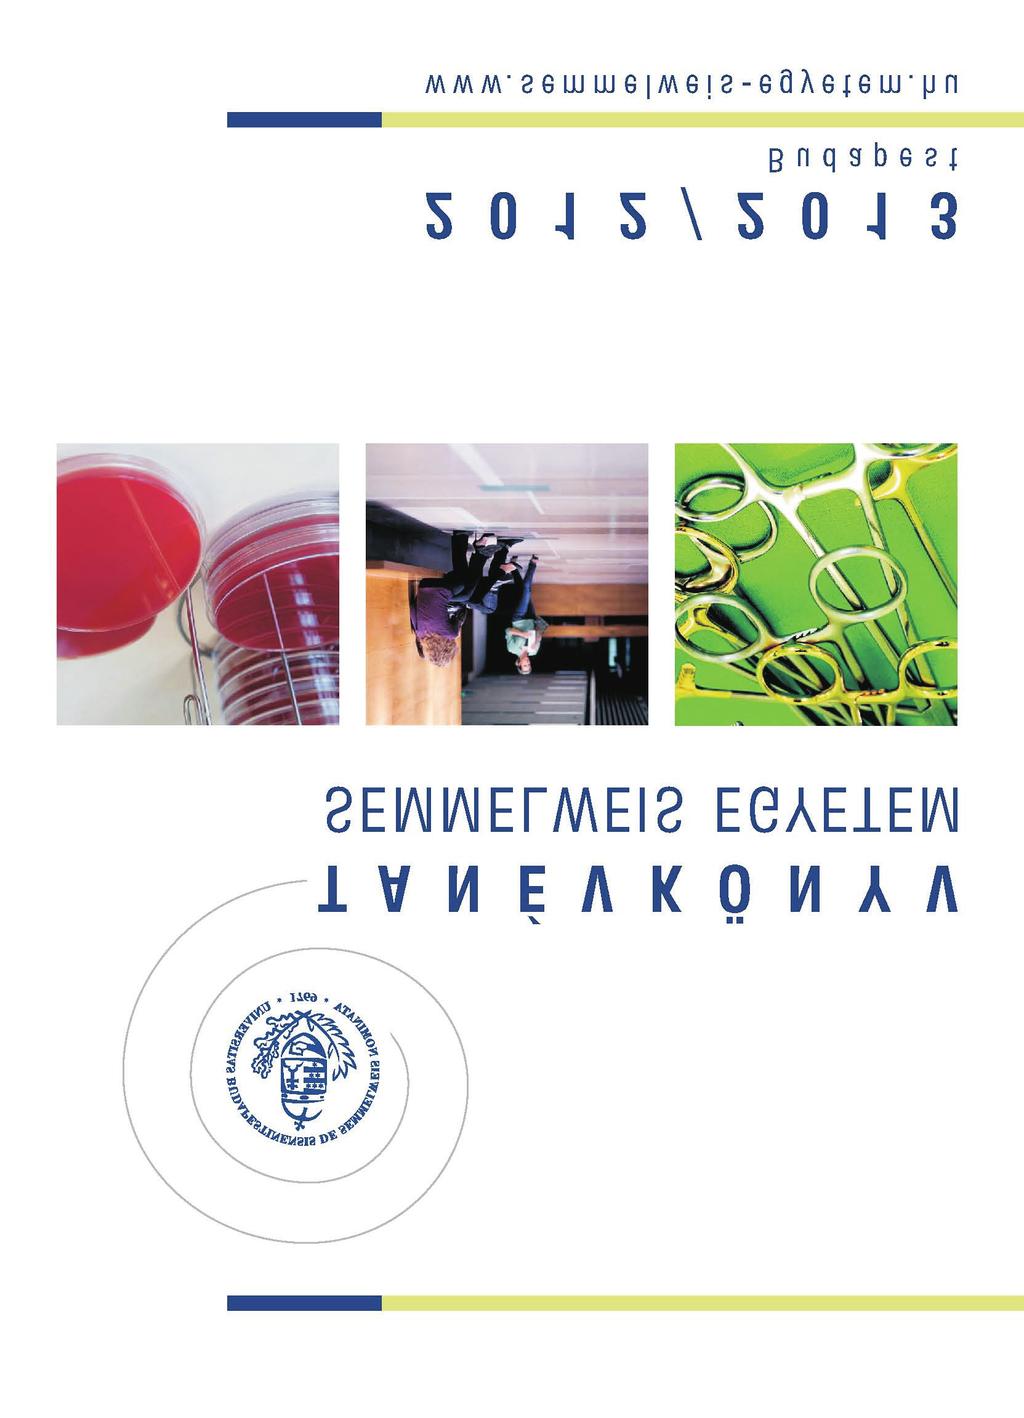 TANÉVKÖNYV SEMMELWEIS EGYETEM 2012/ PDF Free Download